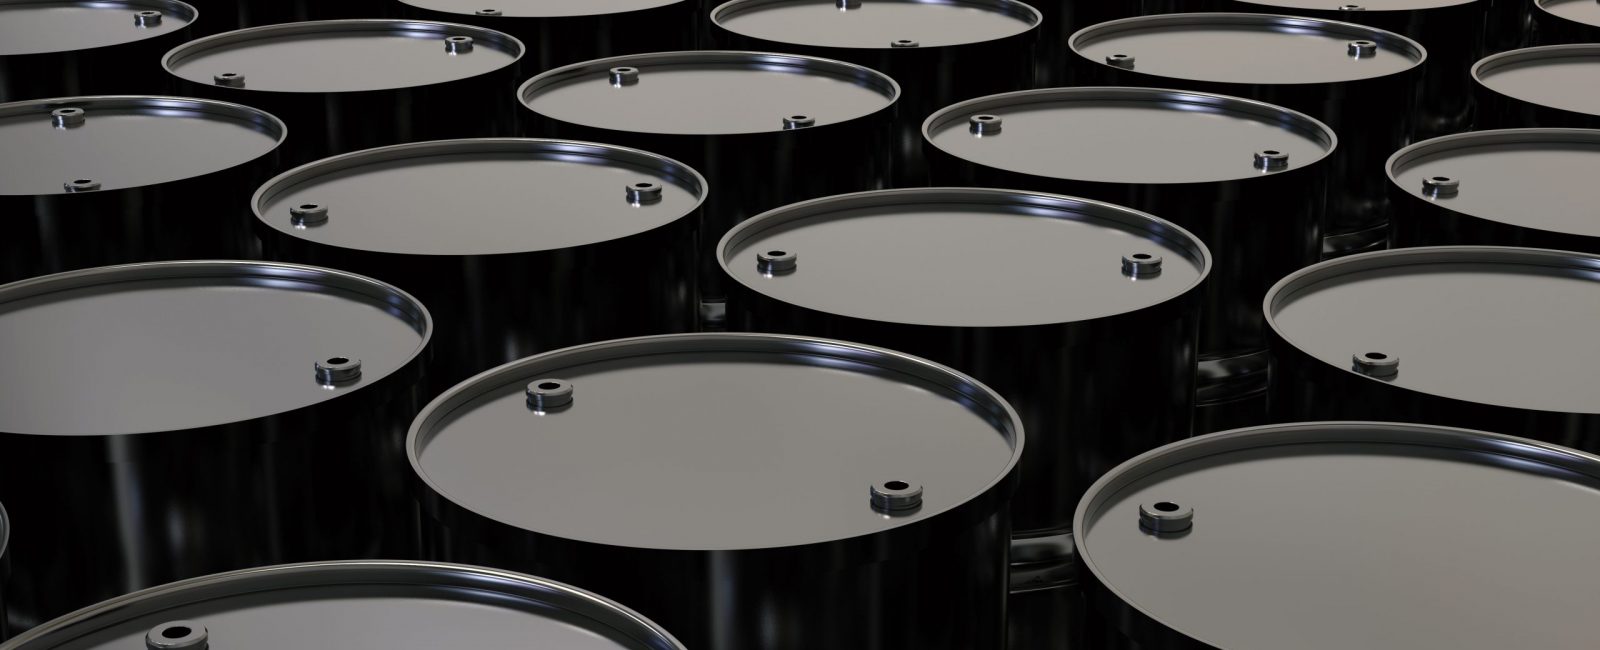 Aesthetic image of black oil barrels.